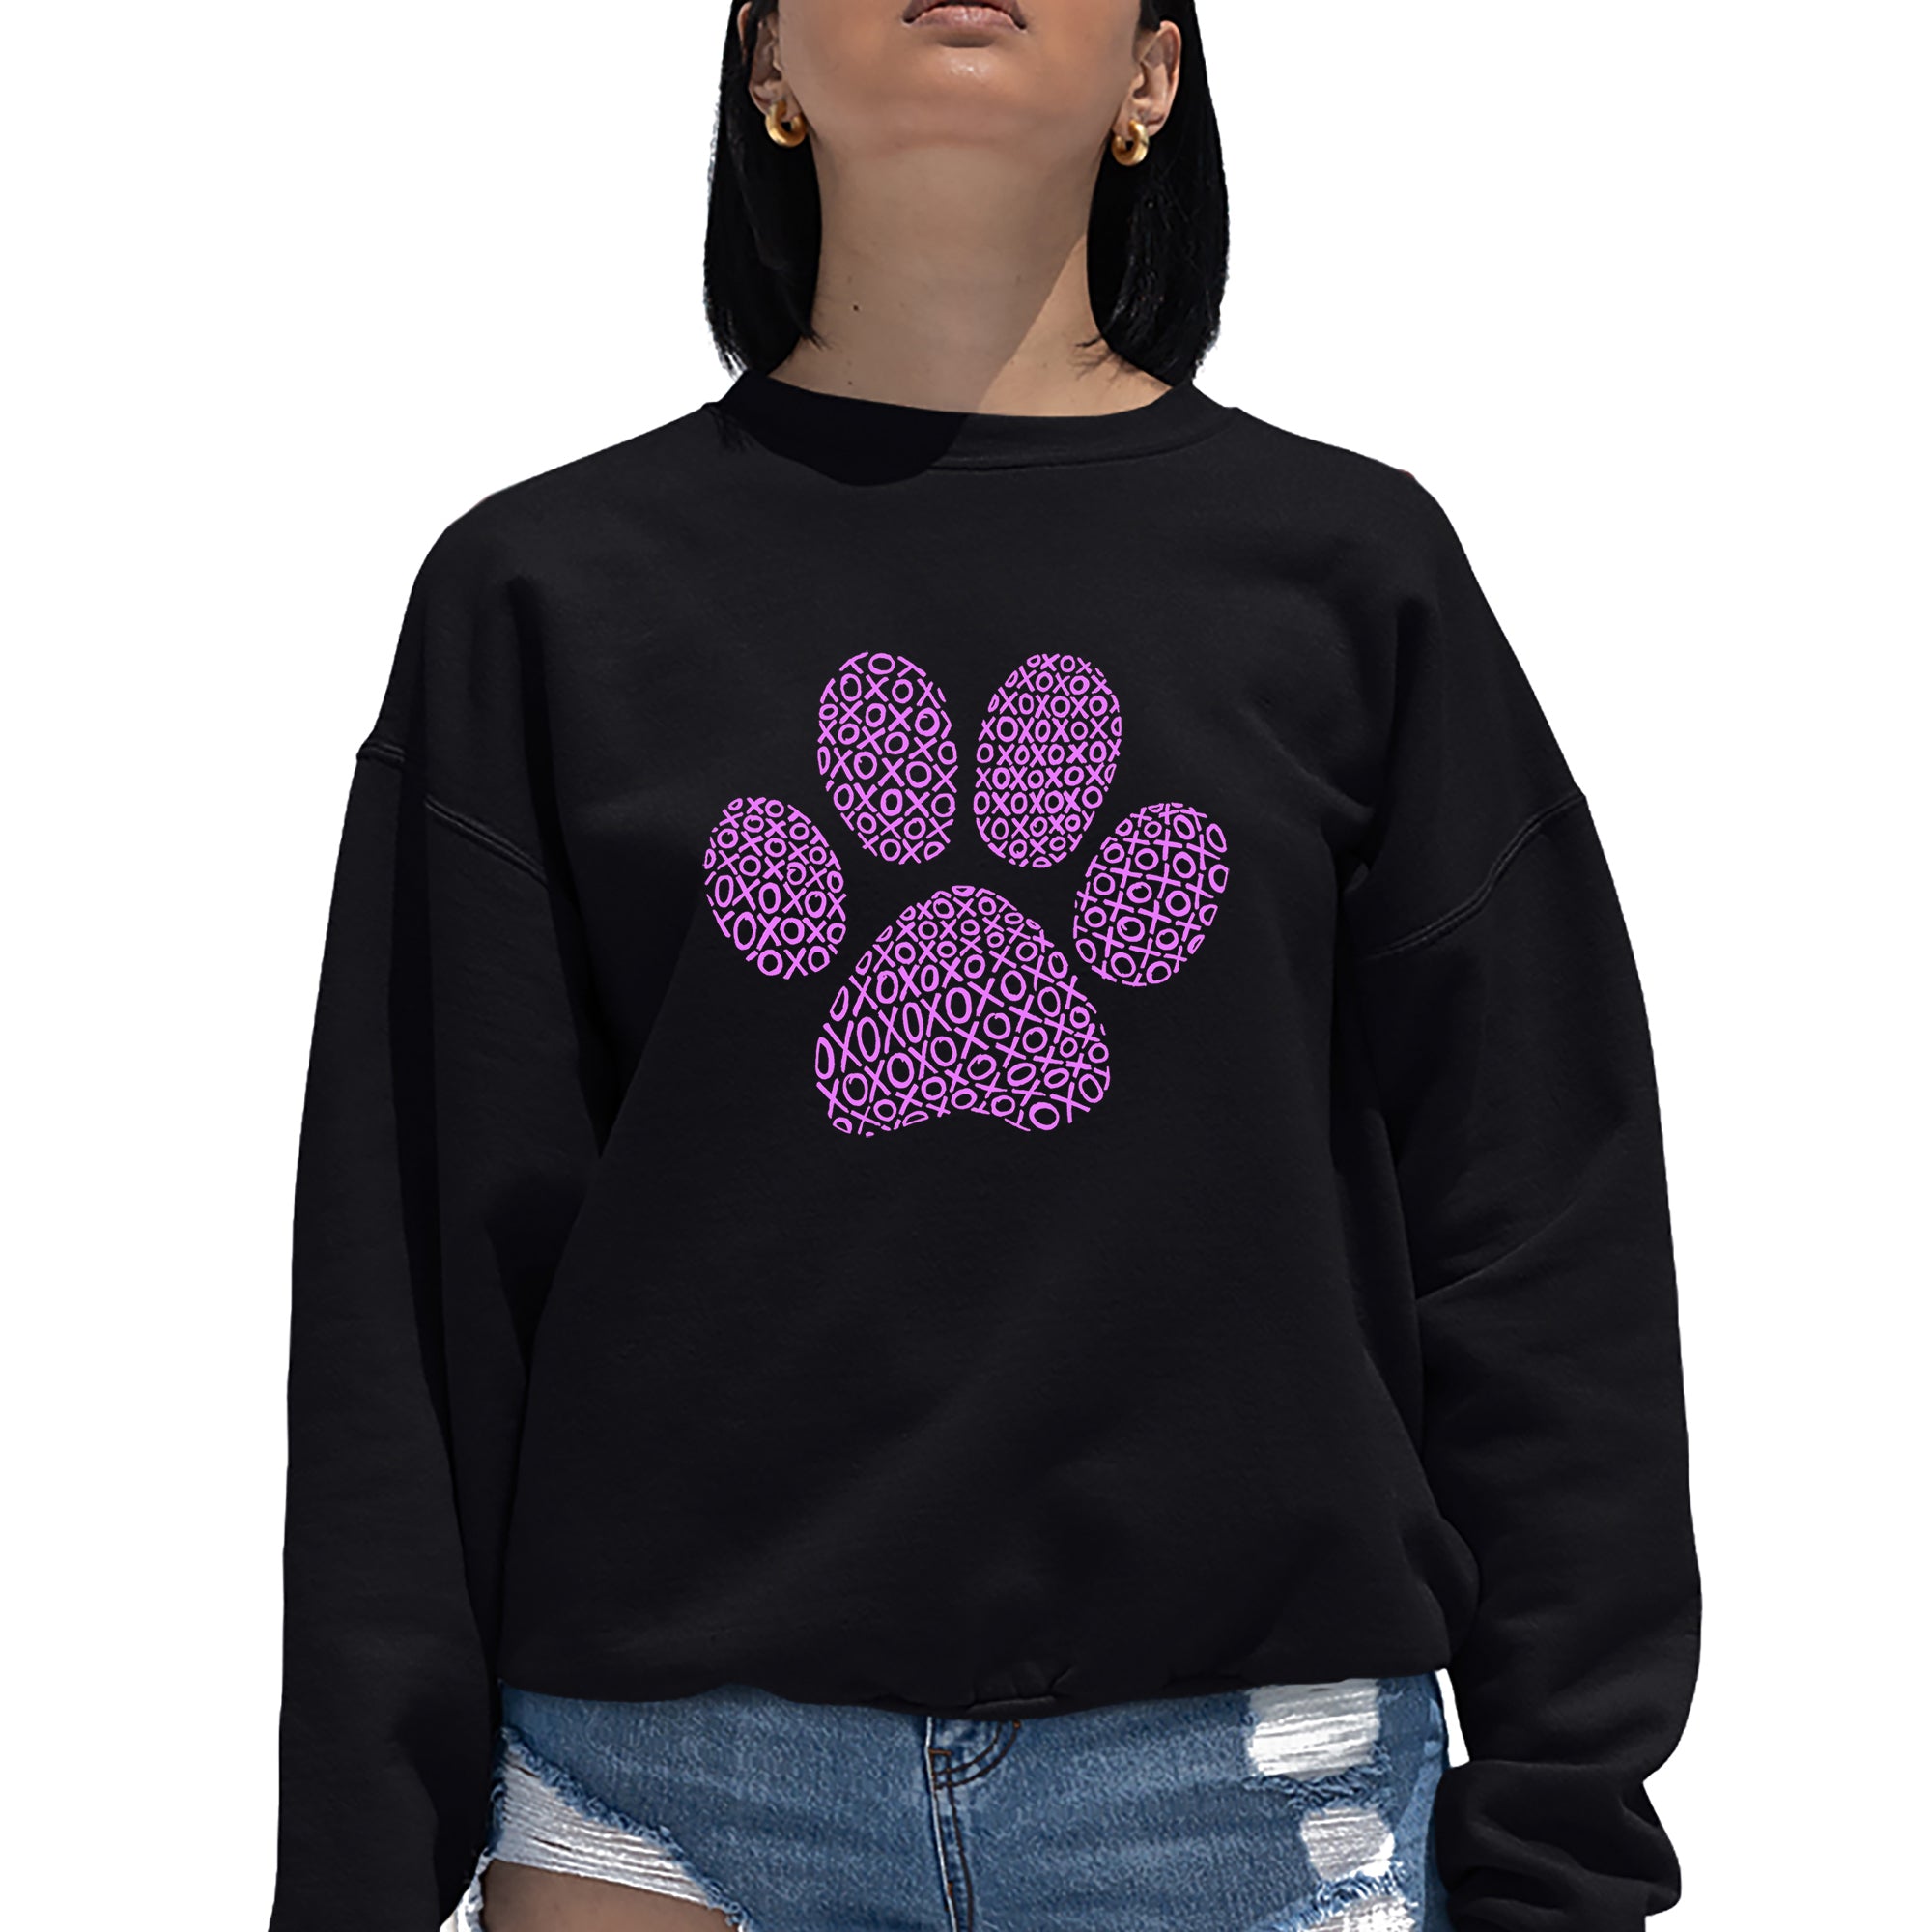 XOXO Dog Paw - Women's Word Art Crewneck Sweatshirt - Black - XXX-Large